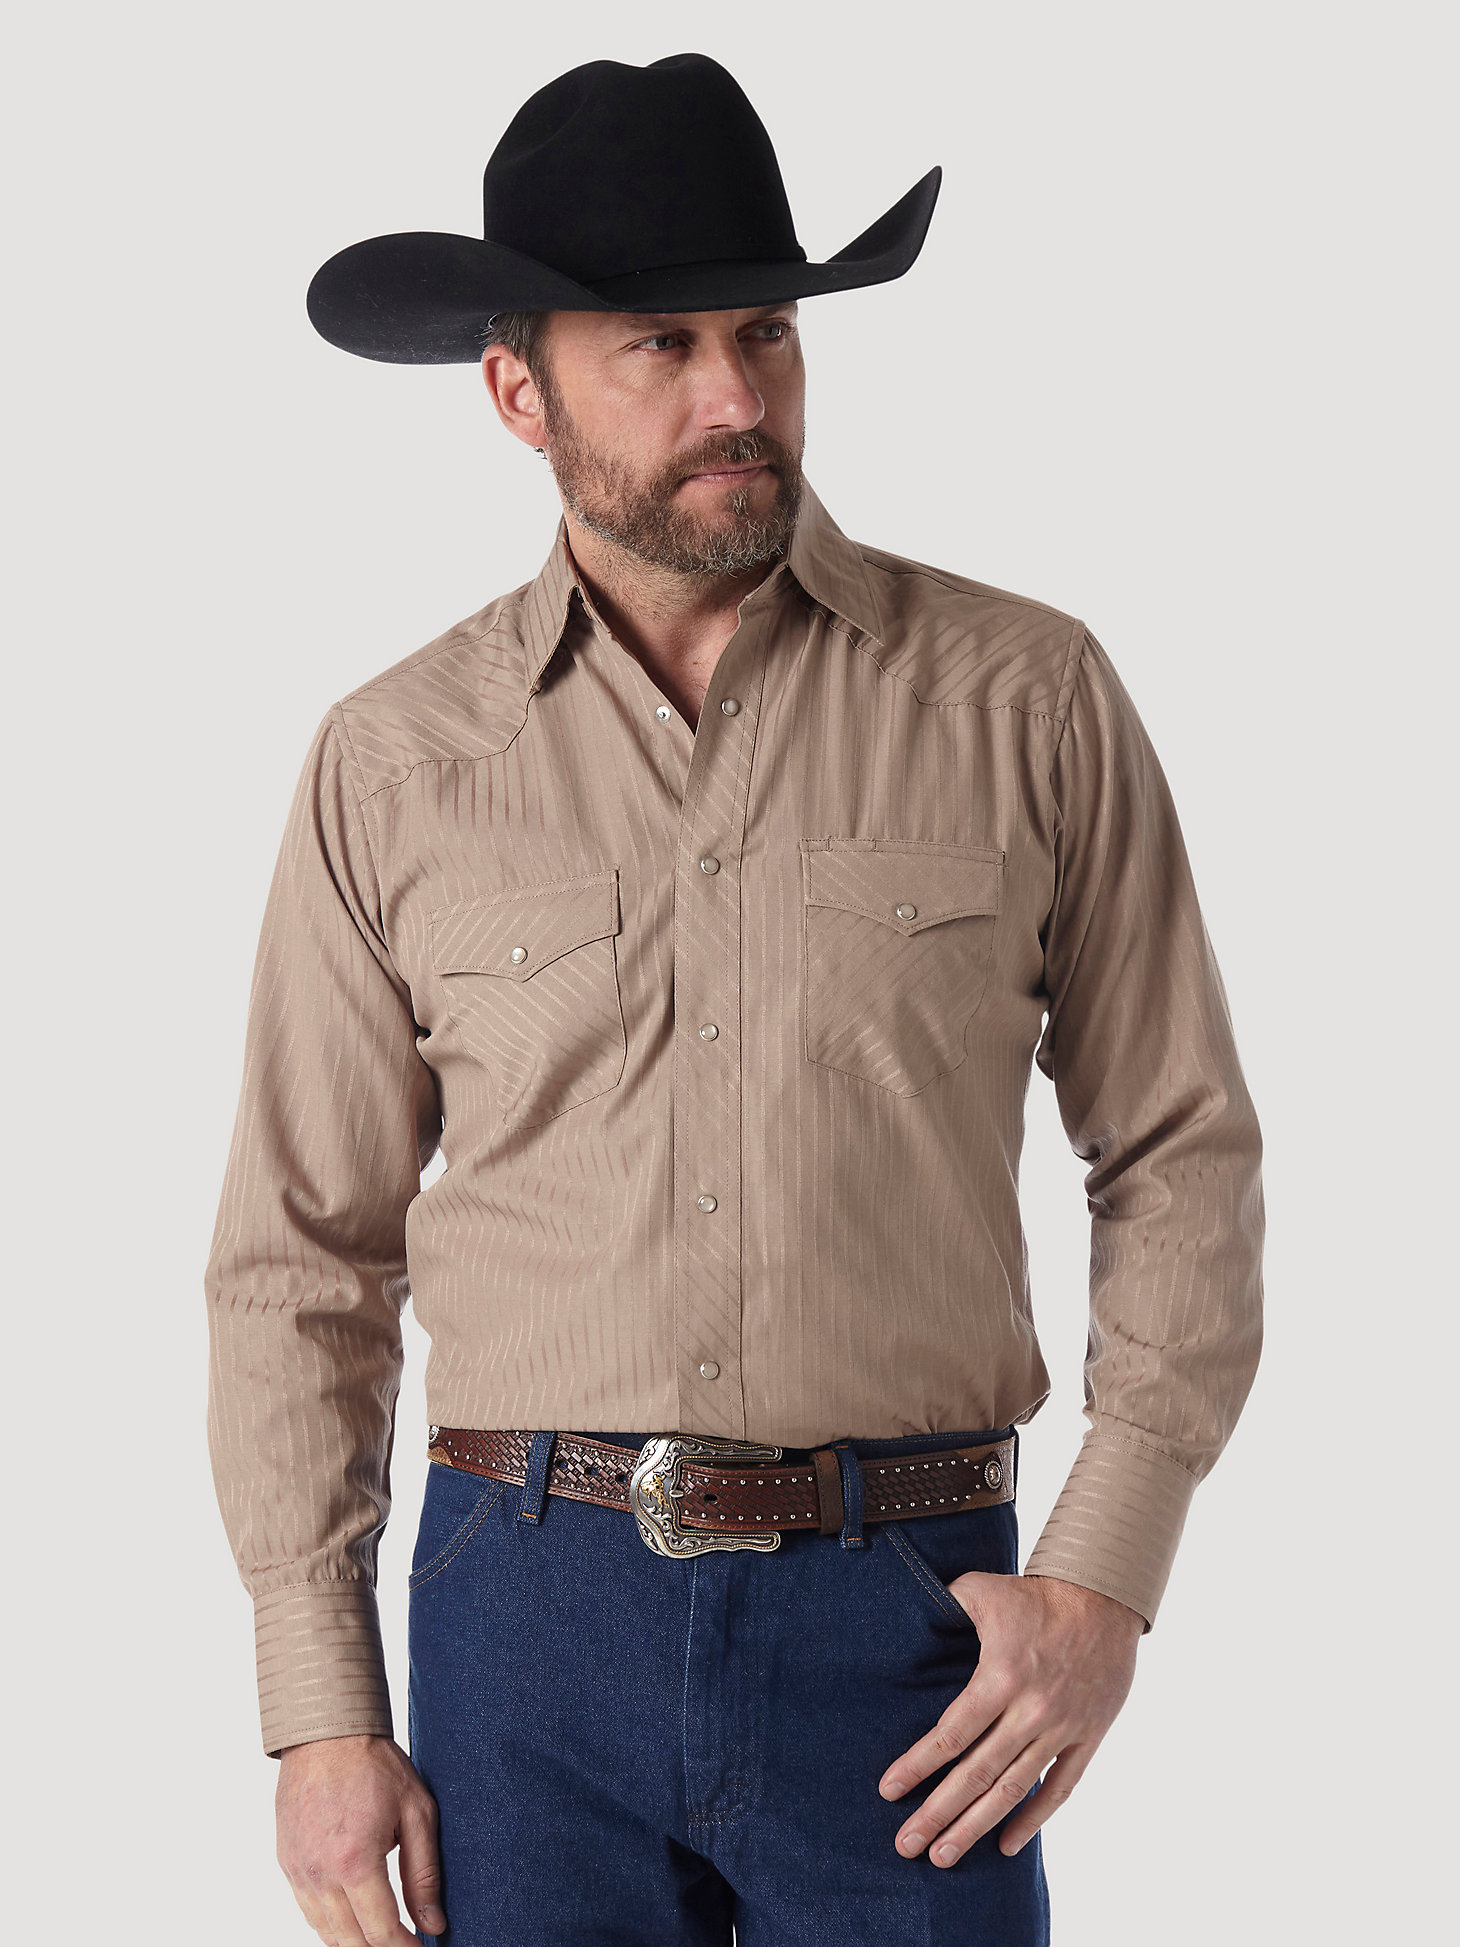 Arriba 31+ imagen western shirts wrangler